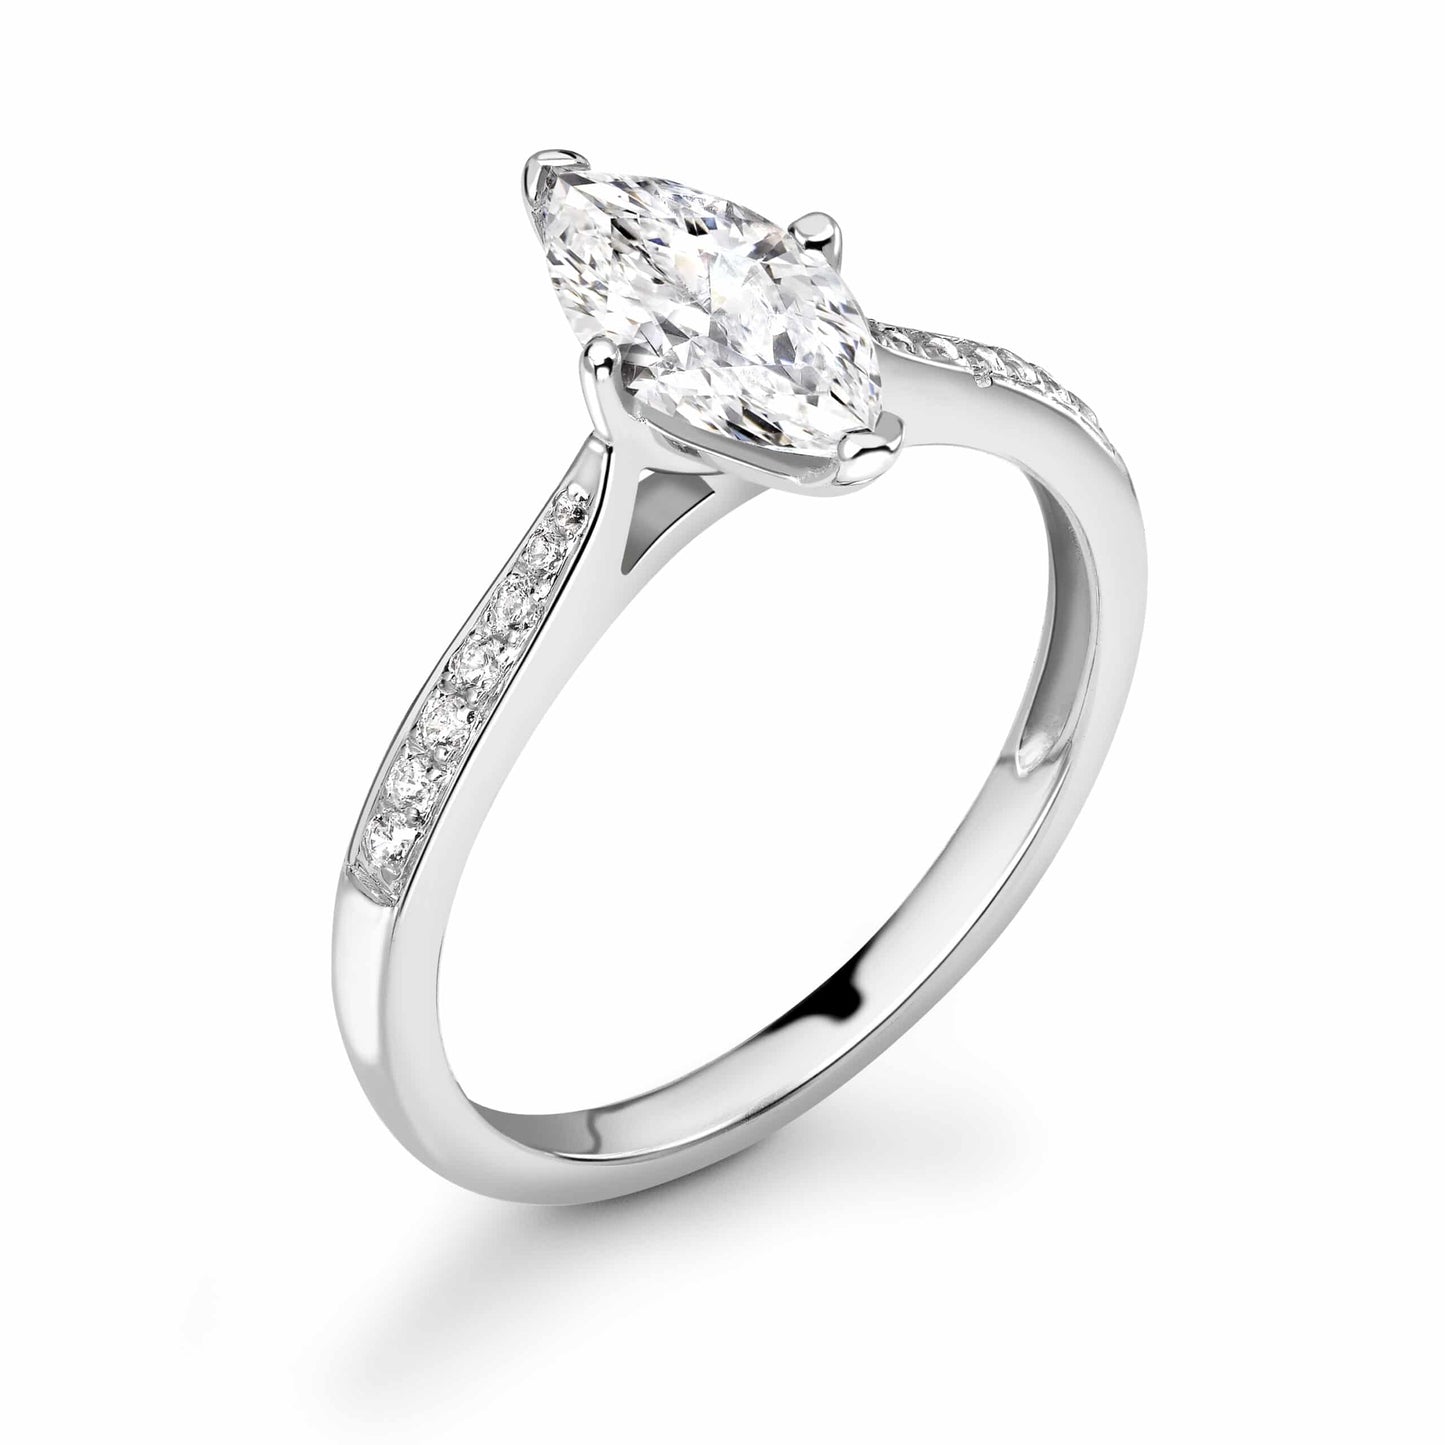 Marquise Trilogy Diamond ring in Platinum